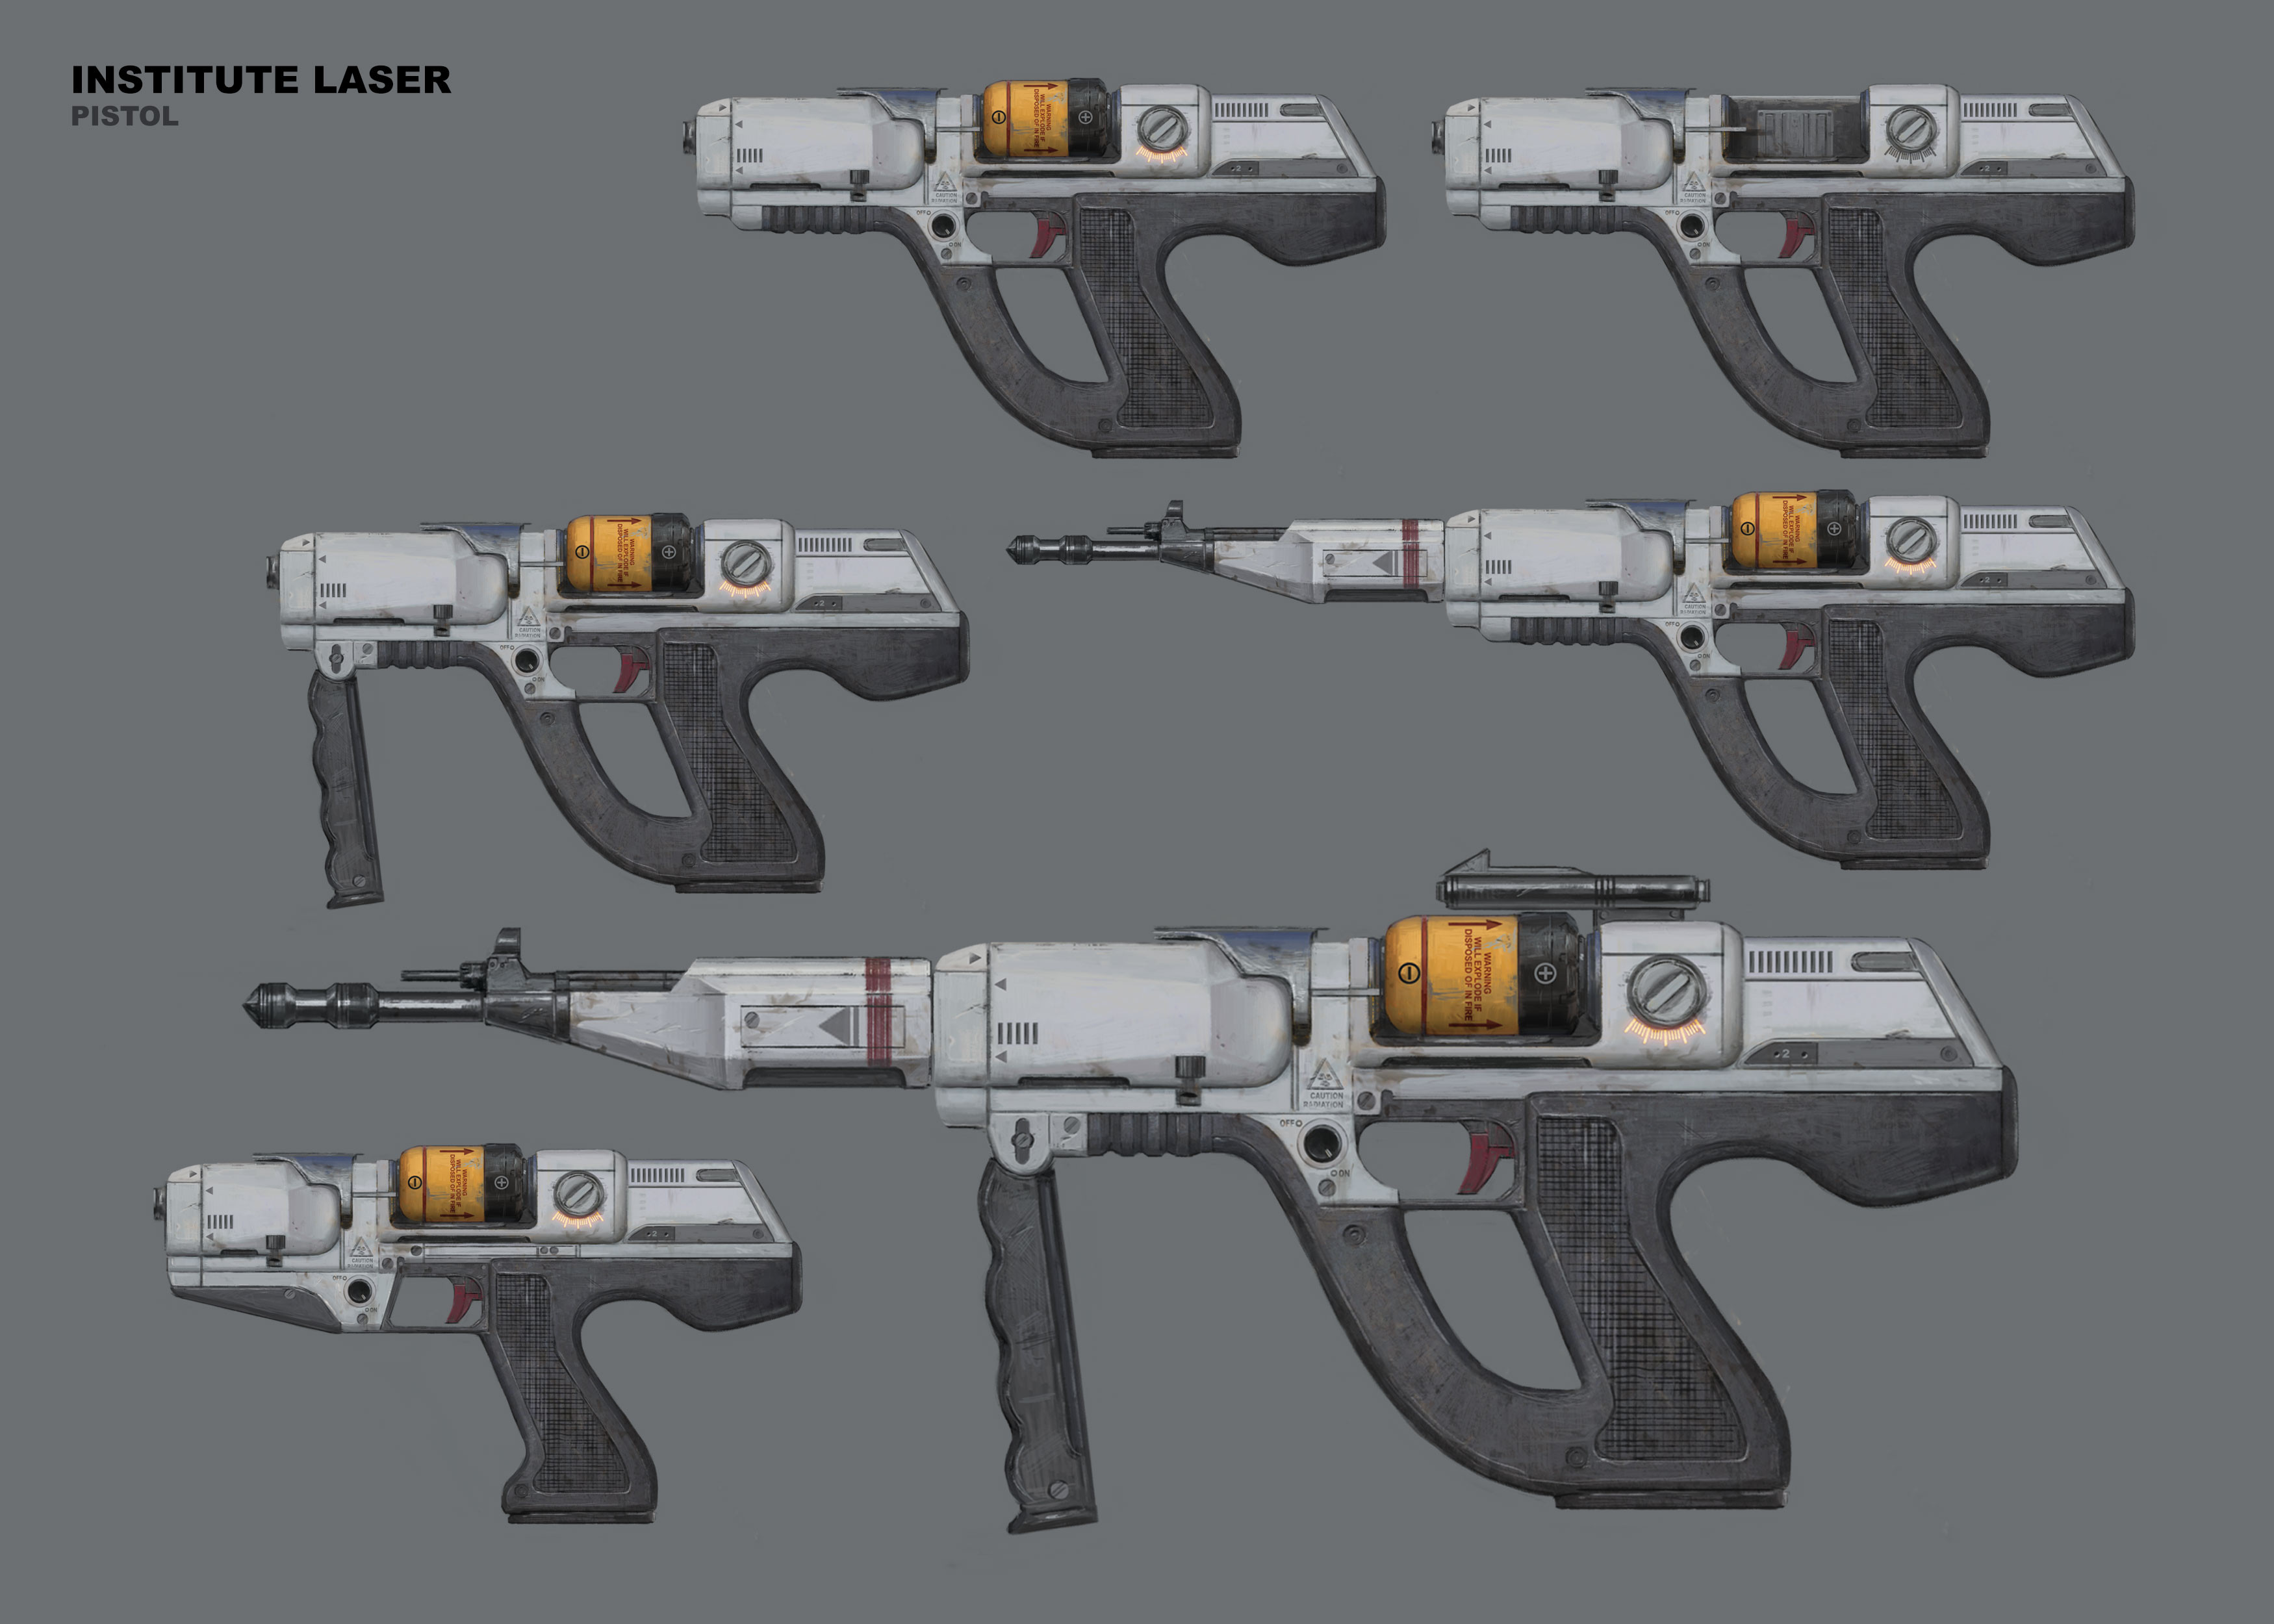 Institute Laser Pistol Redesign.
Fallout 4